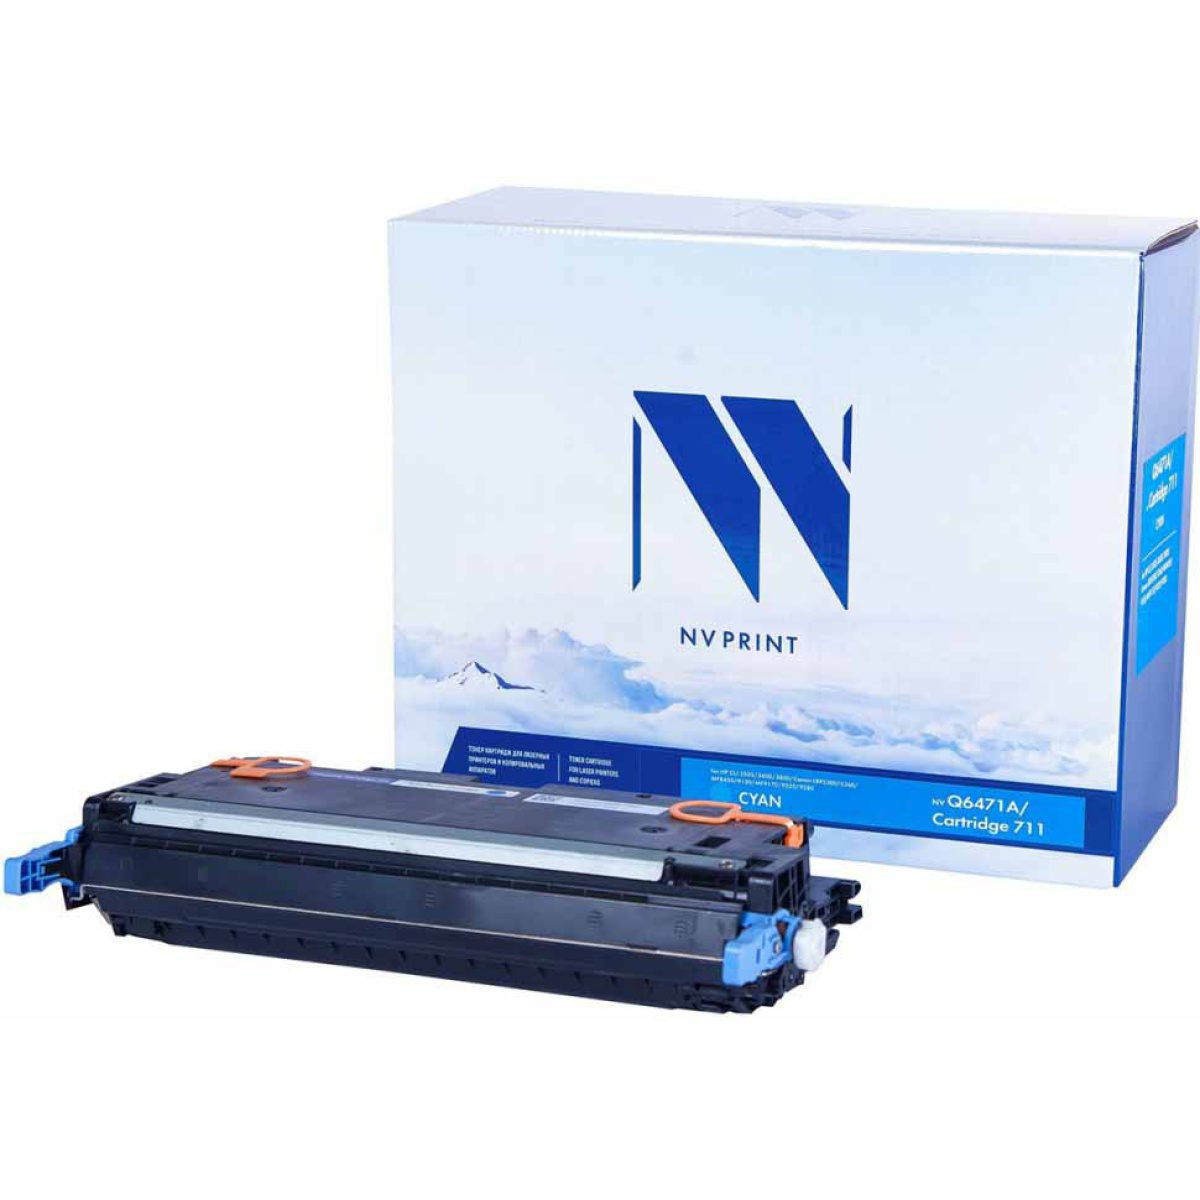 Купить картридж NV Print Q6471A / 711 синий по адекватной цене — Digit-Mall